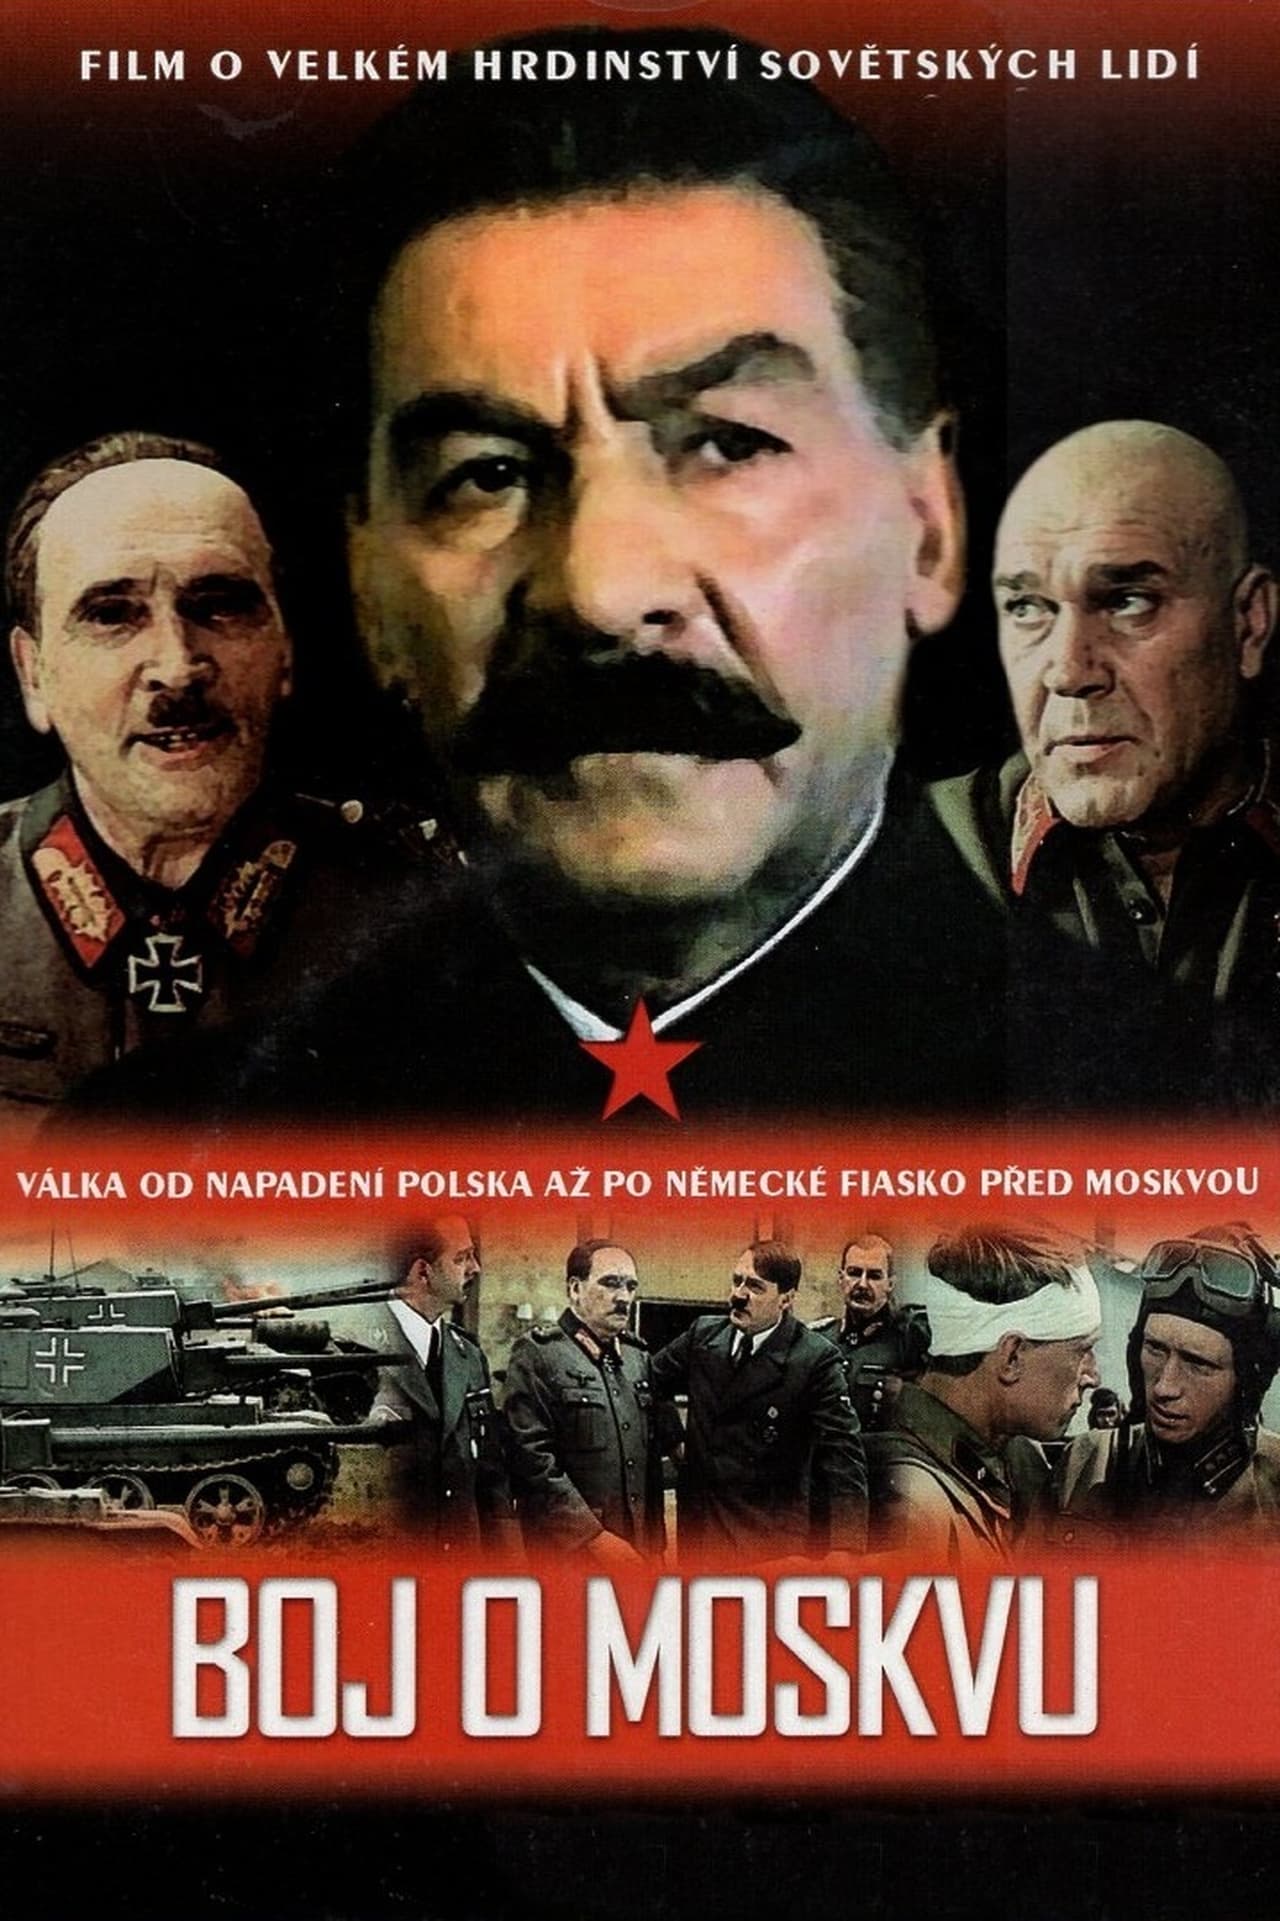 Plakát pro film “Boj o Moskvu”